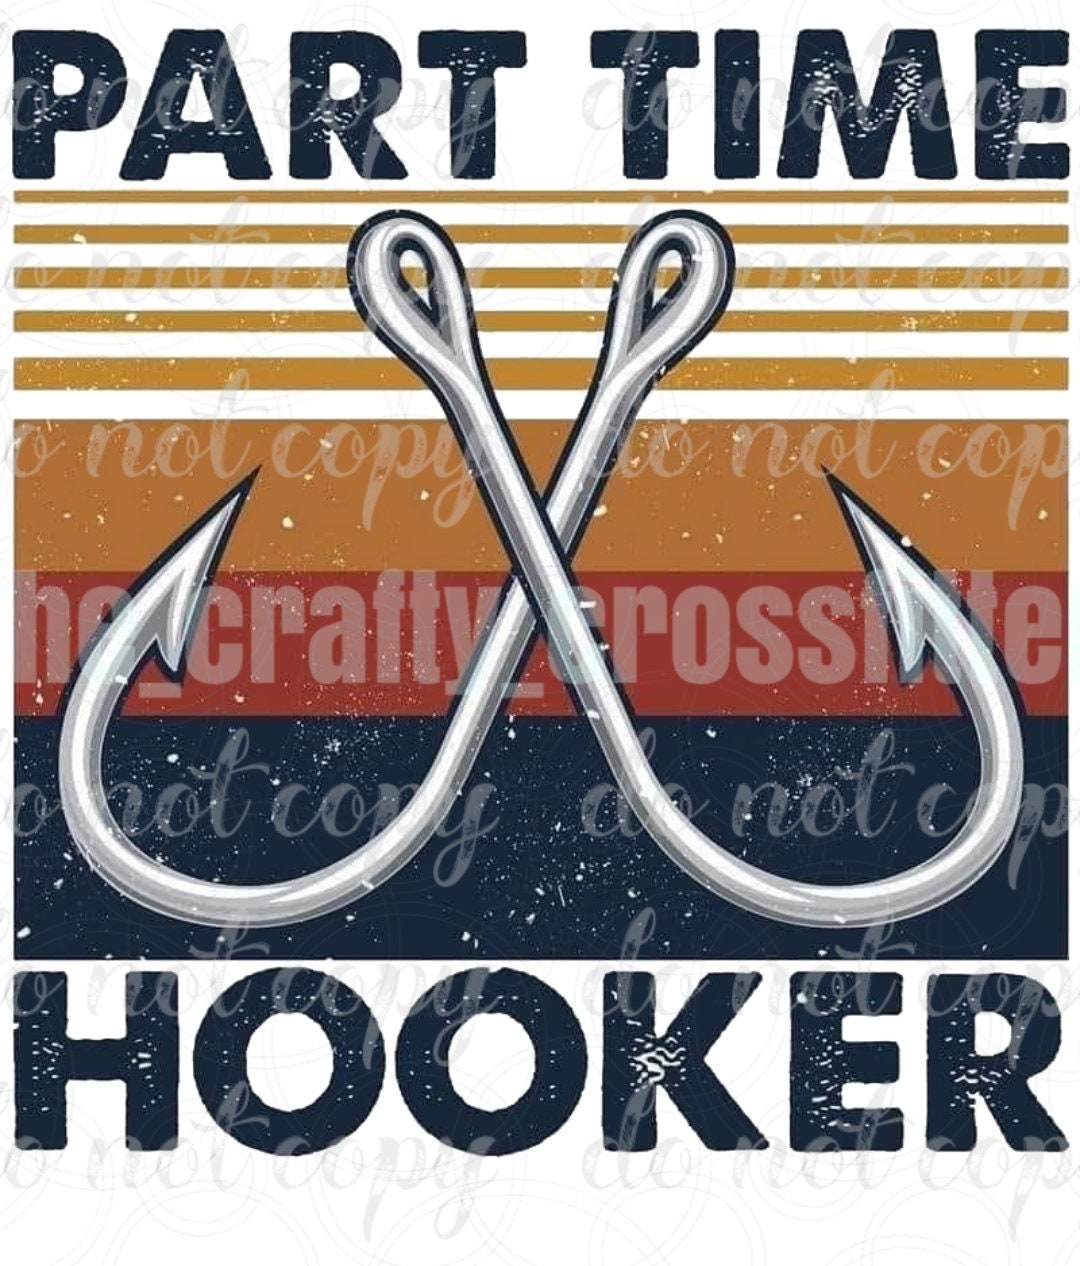 Part Time Hooker 